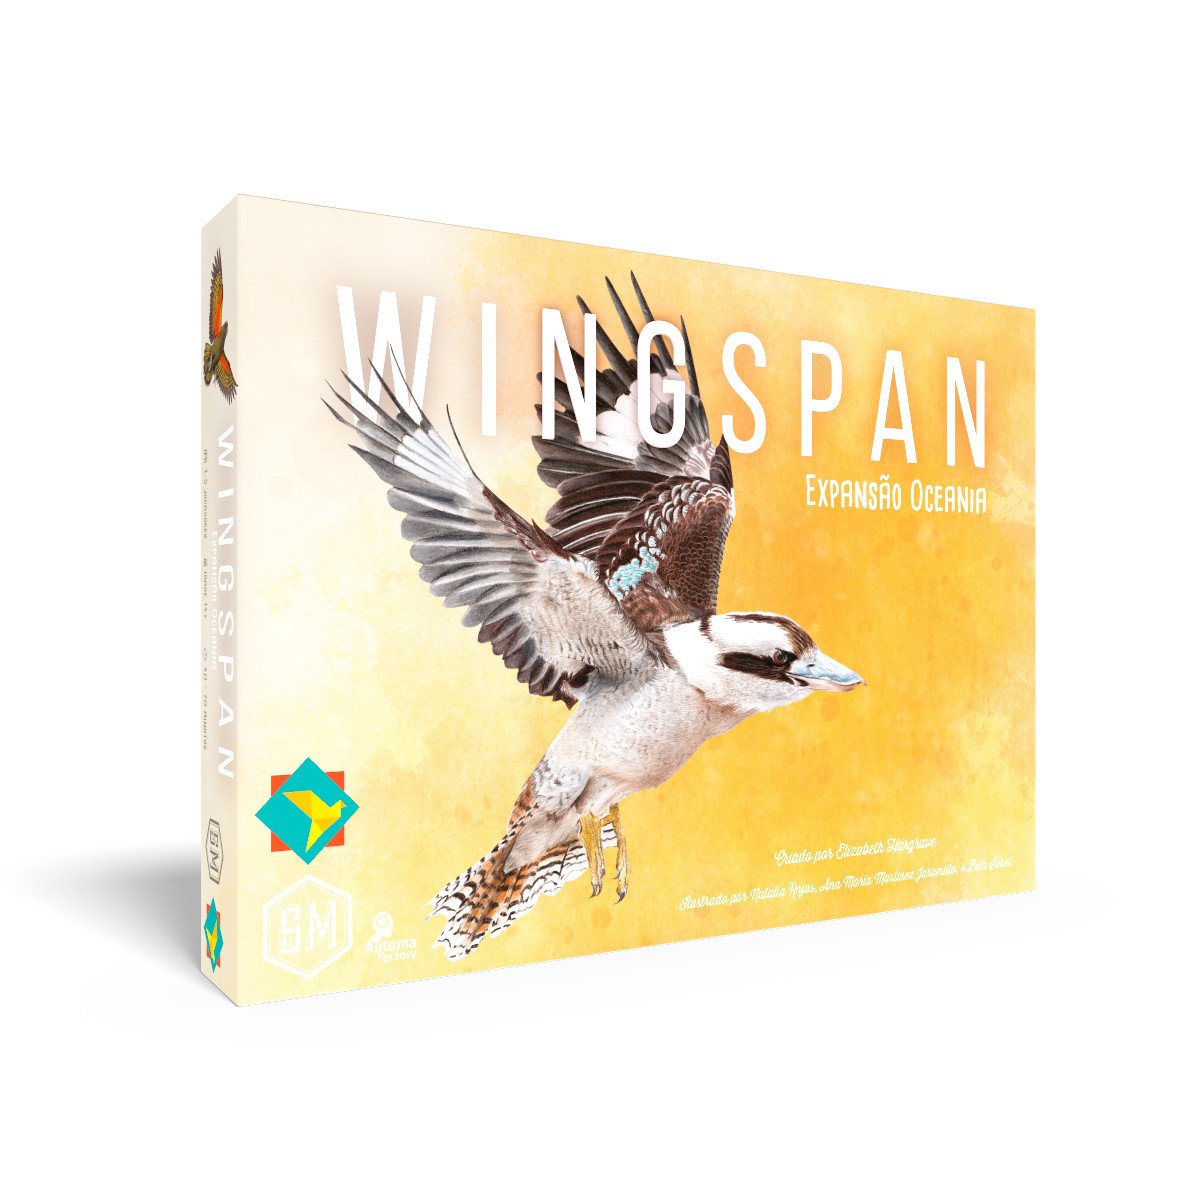 Wingspan: Oceania - Expansão